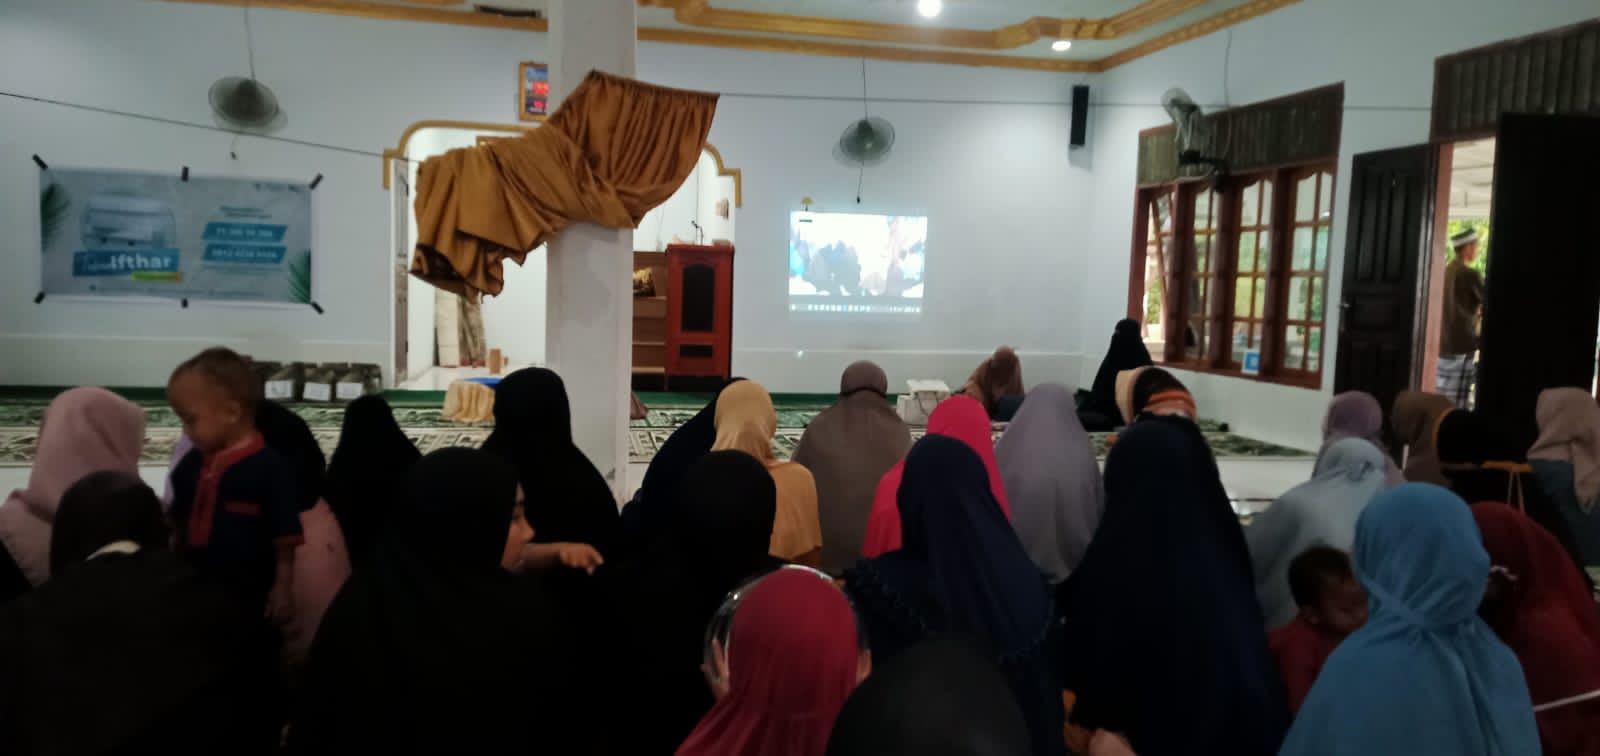 Wujudkan Ramadhan Berkah, Muslimah Wahdah Poso Gelar Tebar Ifthar di Pesisir Desa Taunca